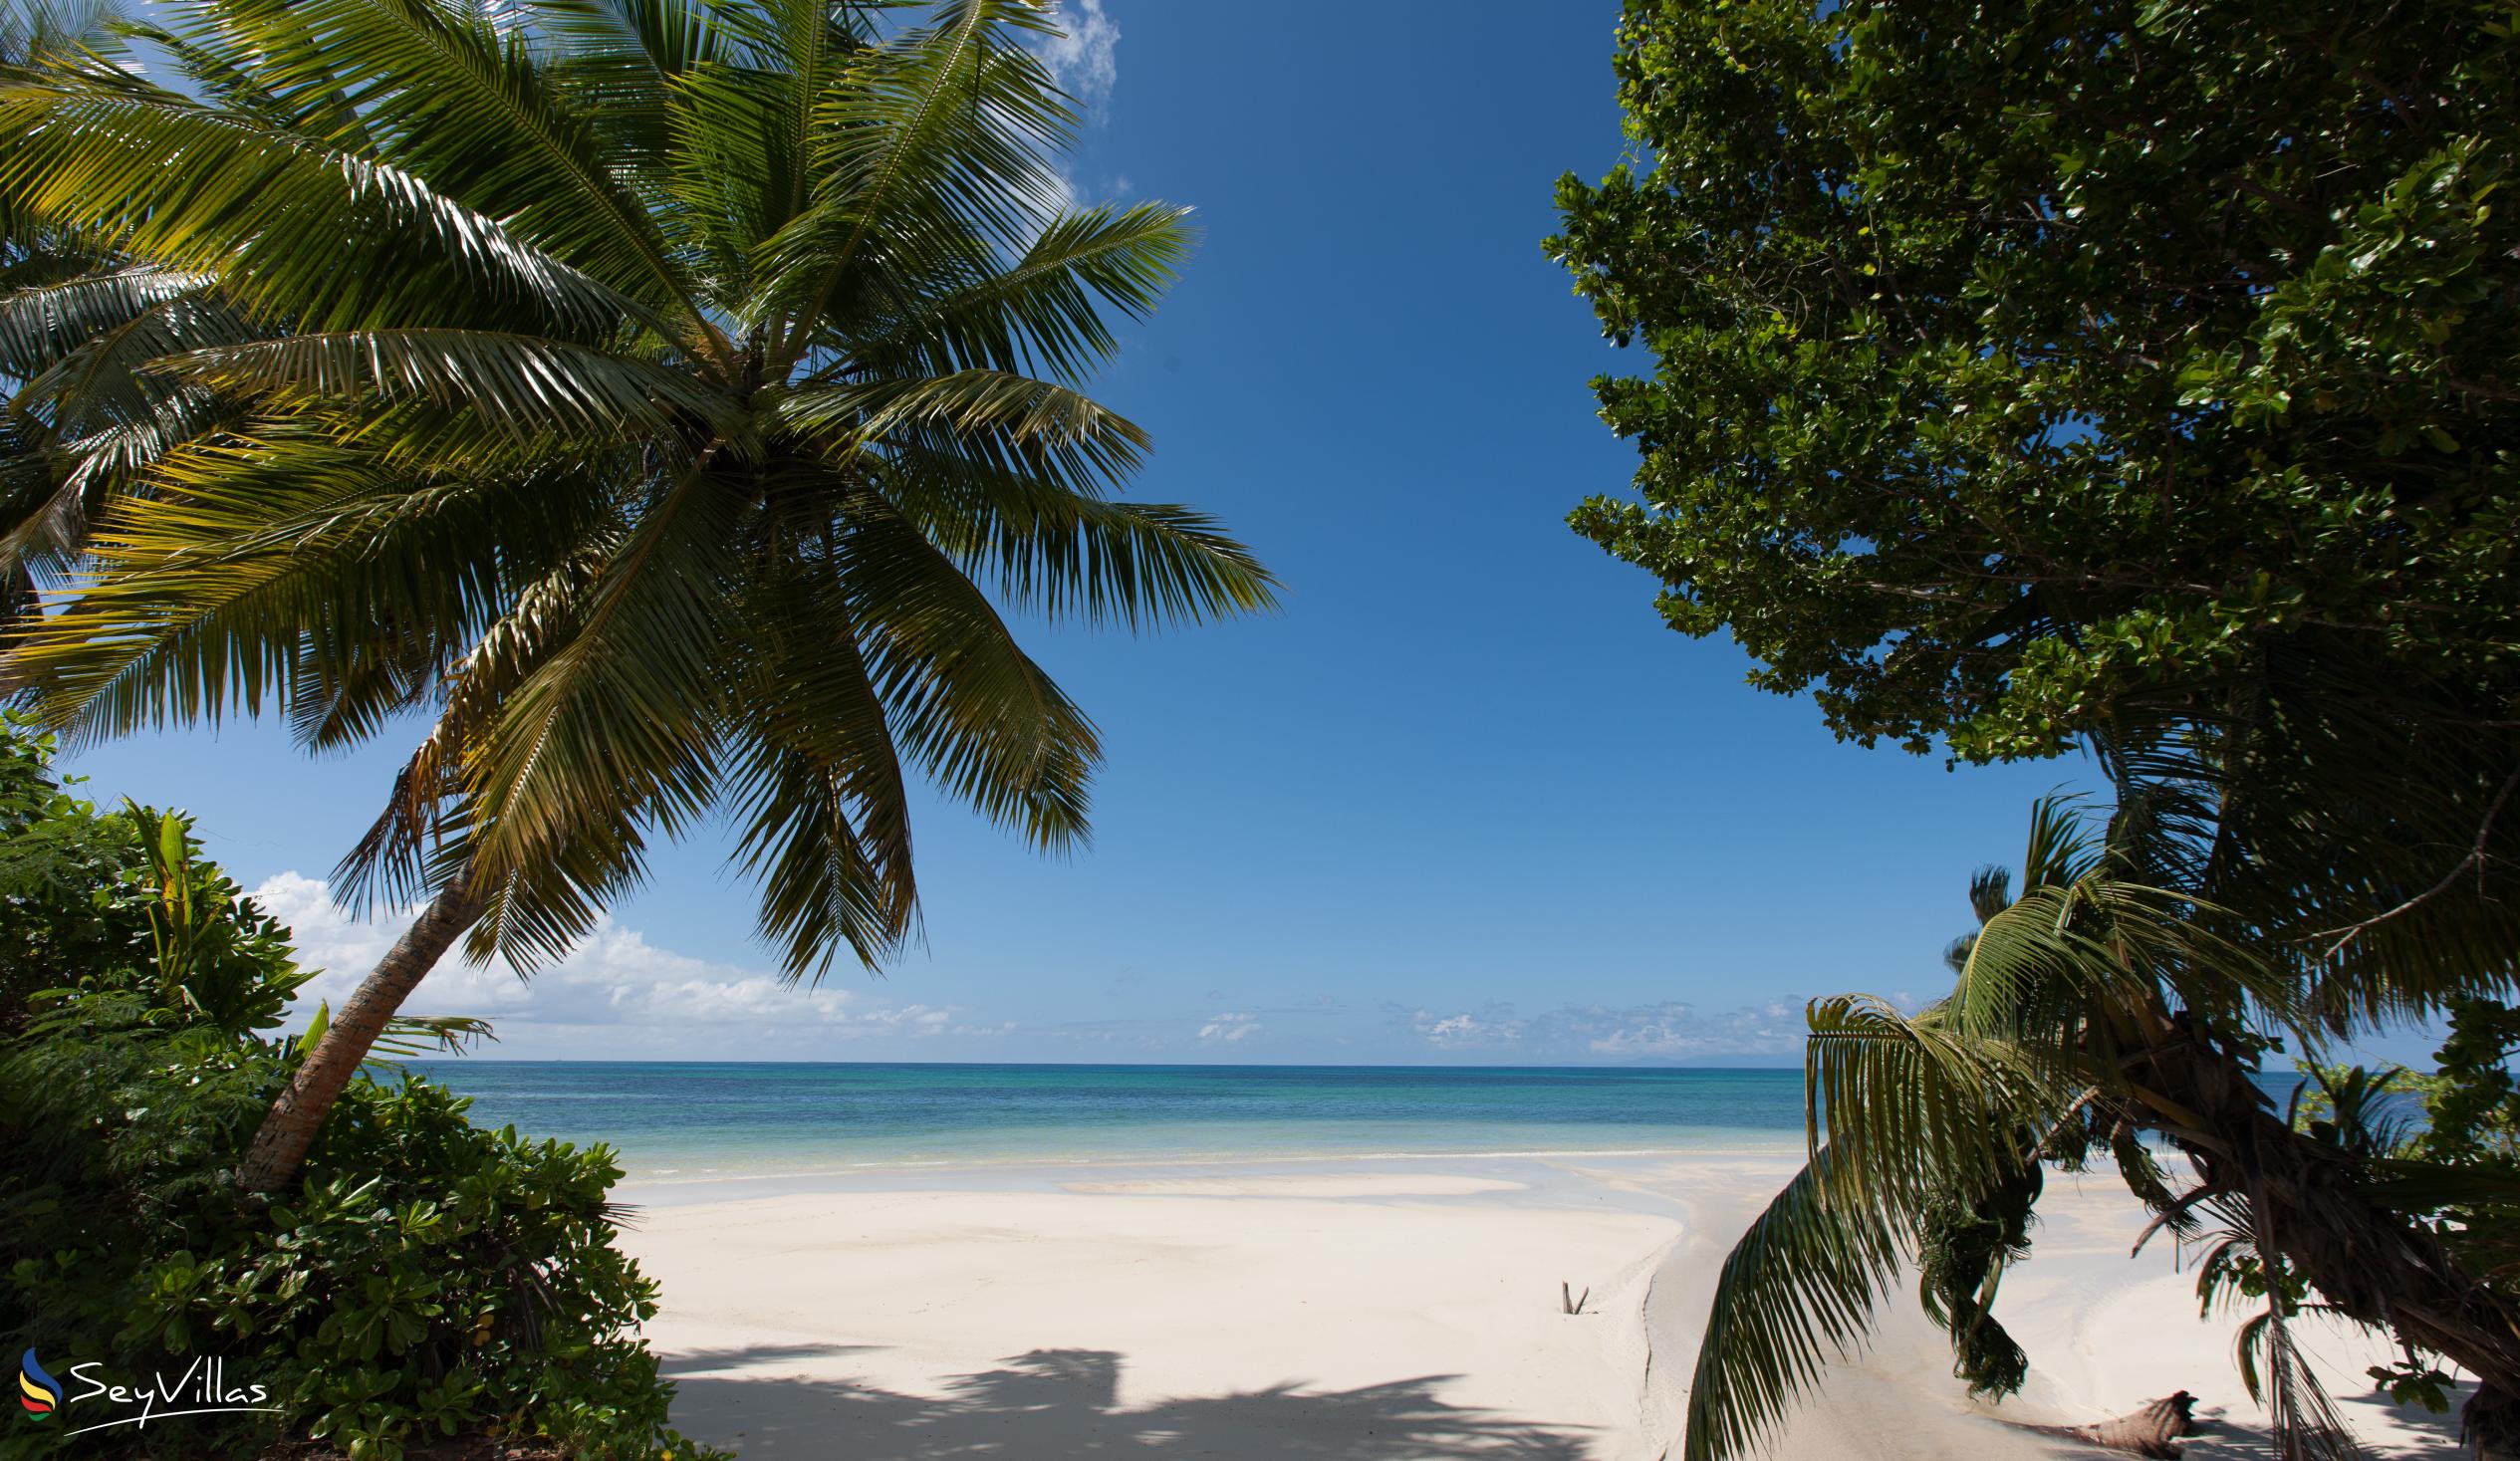 Photo 18: Anse St Sauveur - Praslin (Seychelles)